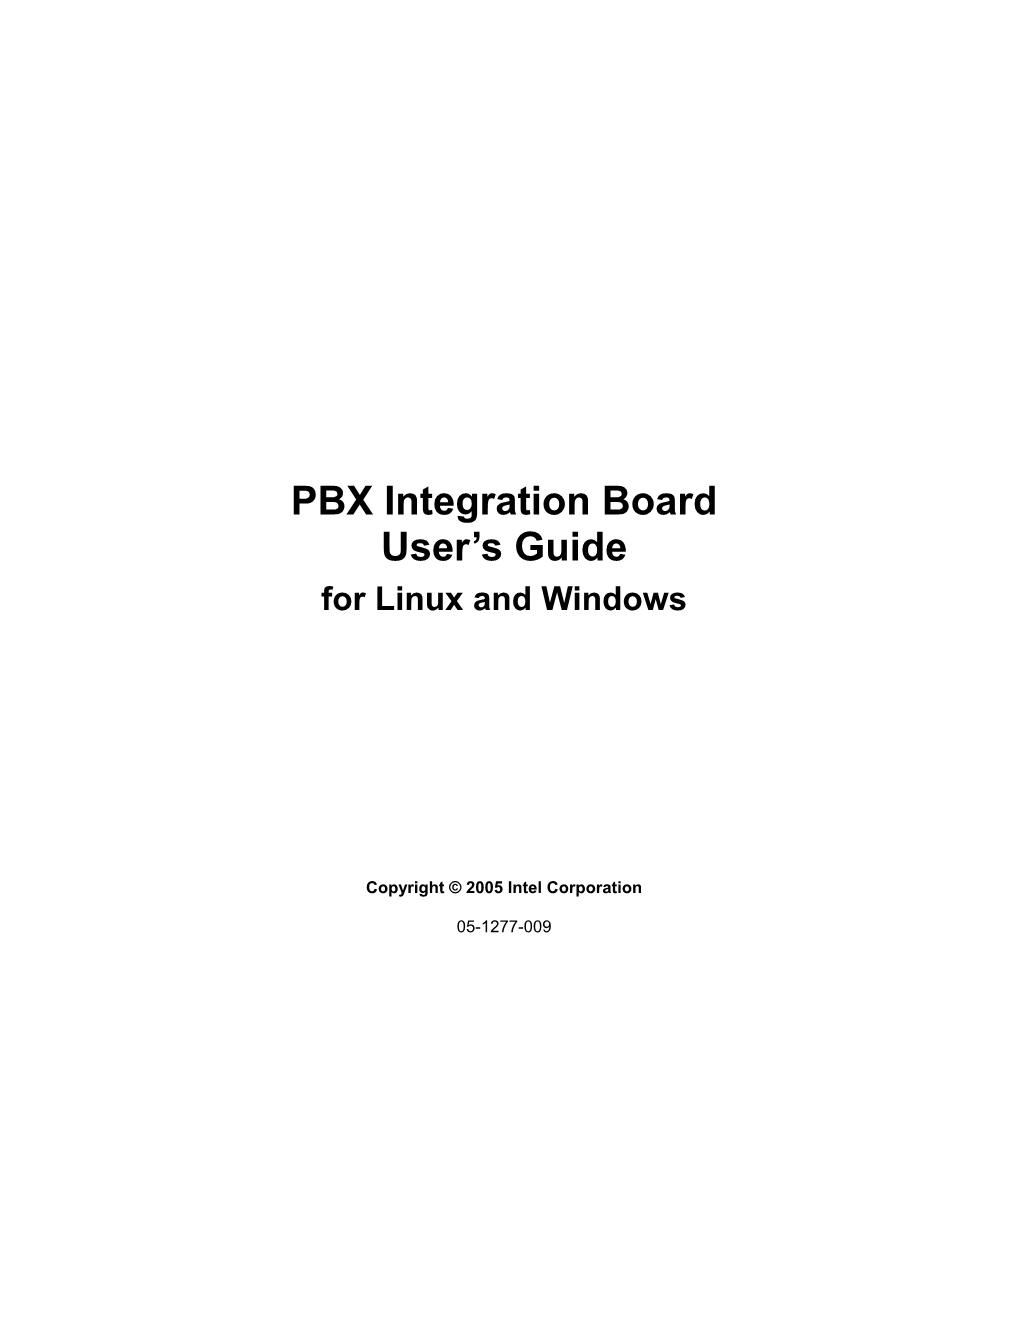 PBX Integration Board User's Guide